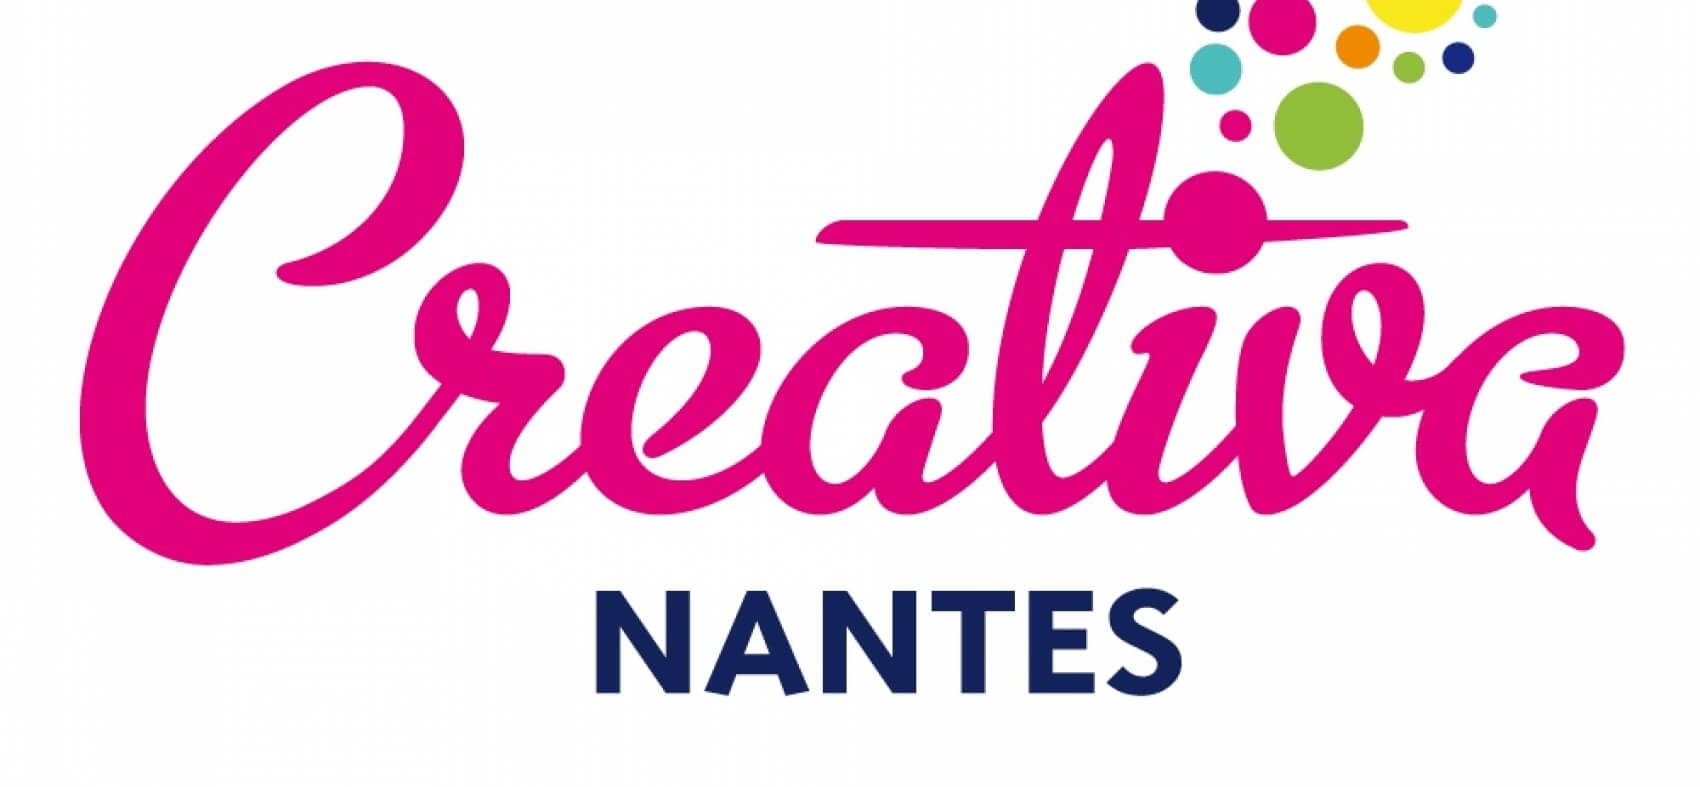 Créativa Nantes